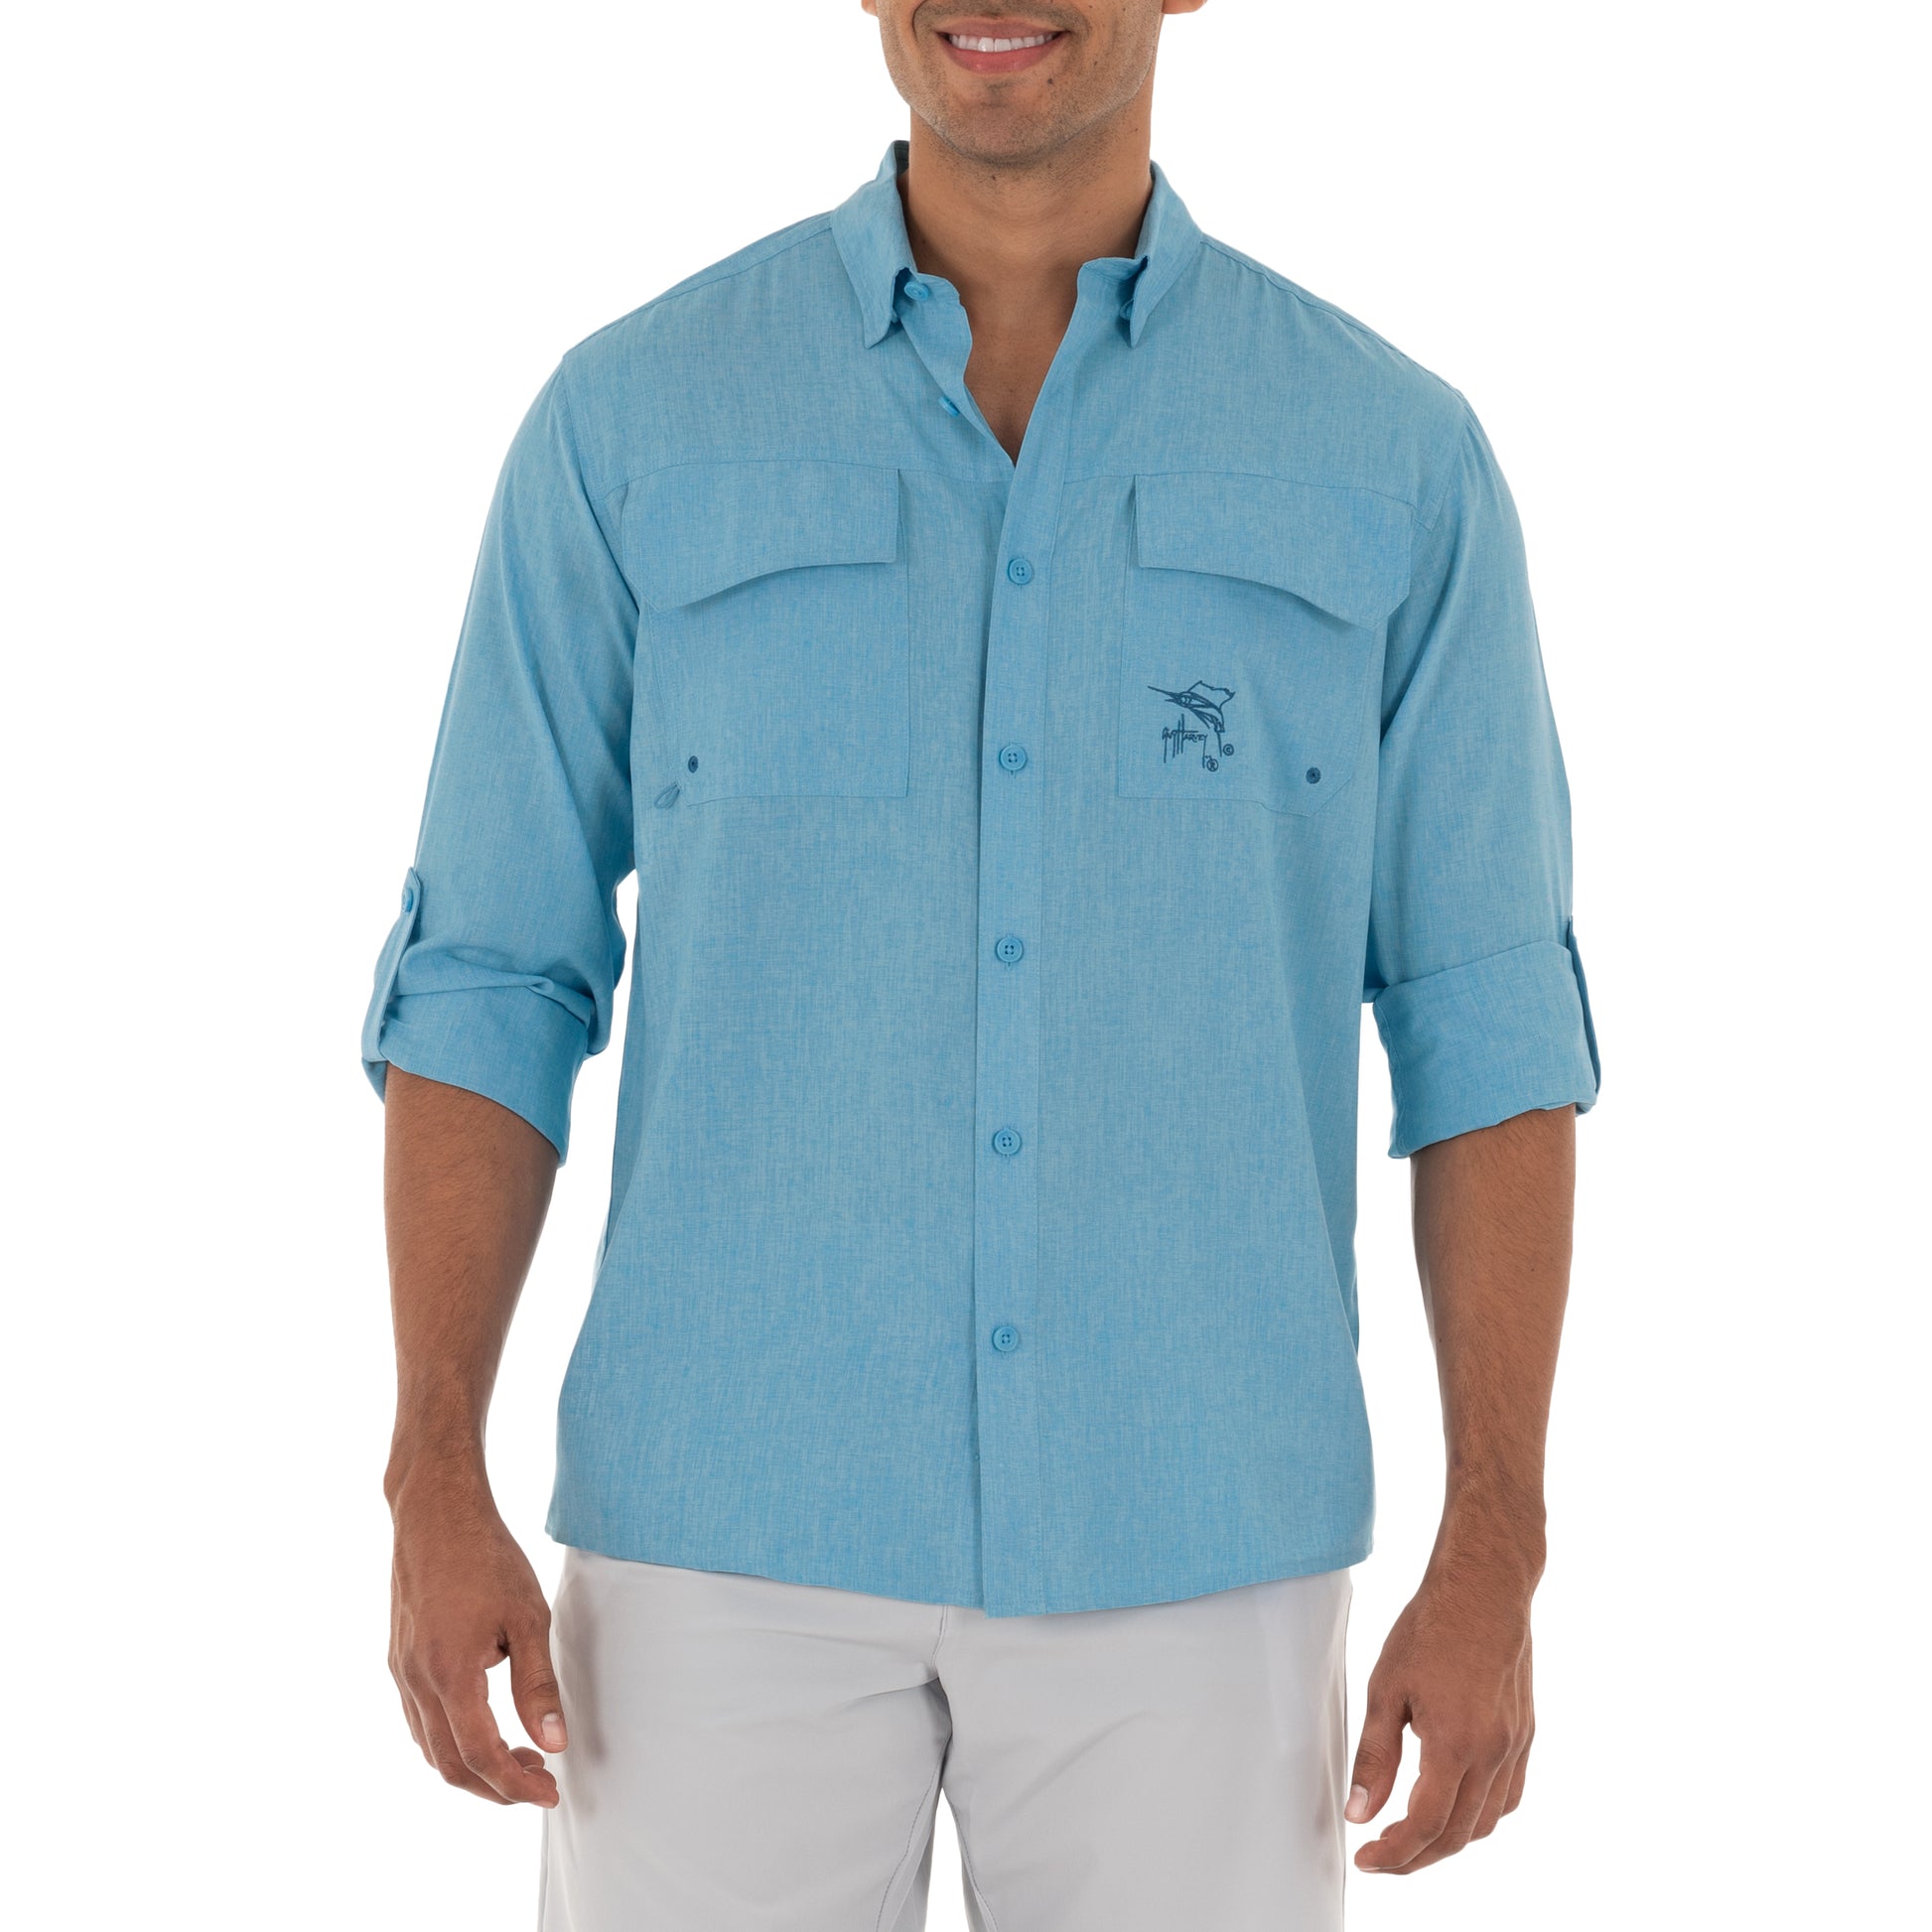 Men's Long Sleeve Heather Textured Cationic Blue Fishing Shirt View 4